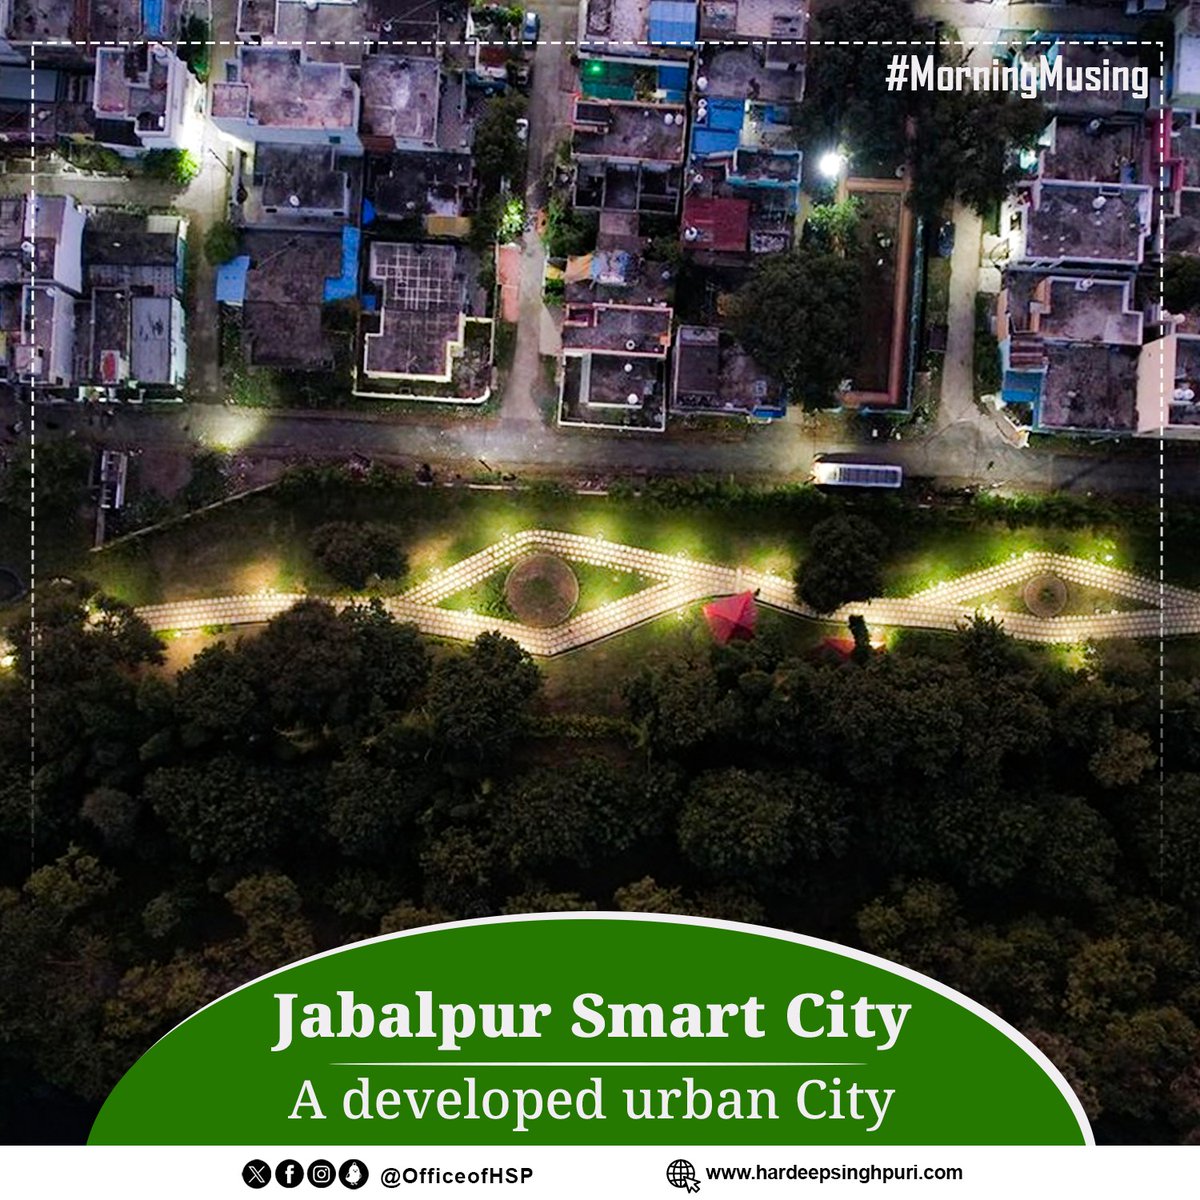 Jabalpur Smart City - A developed urban City.
#MorningMusing